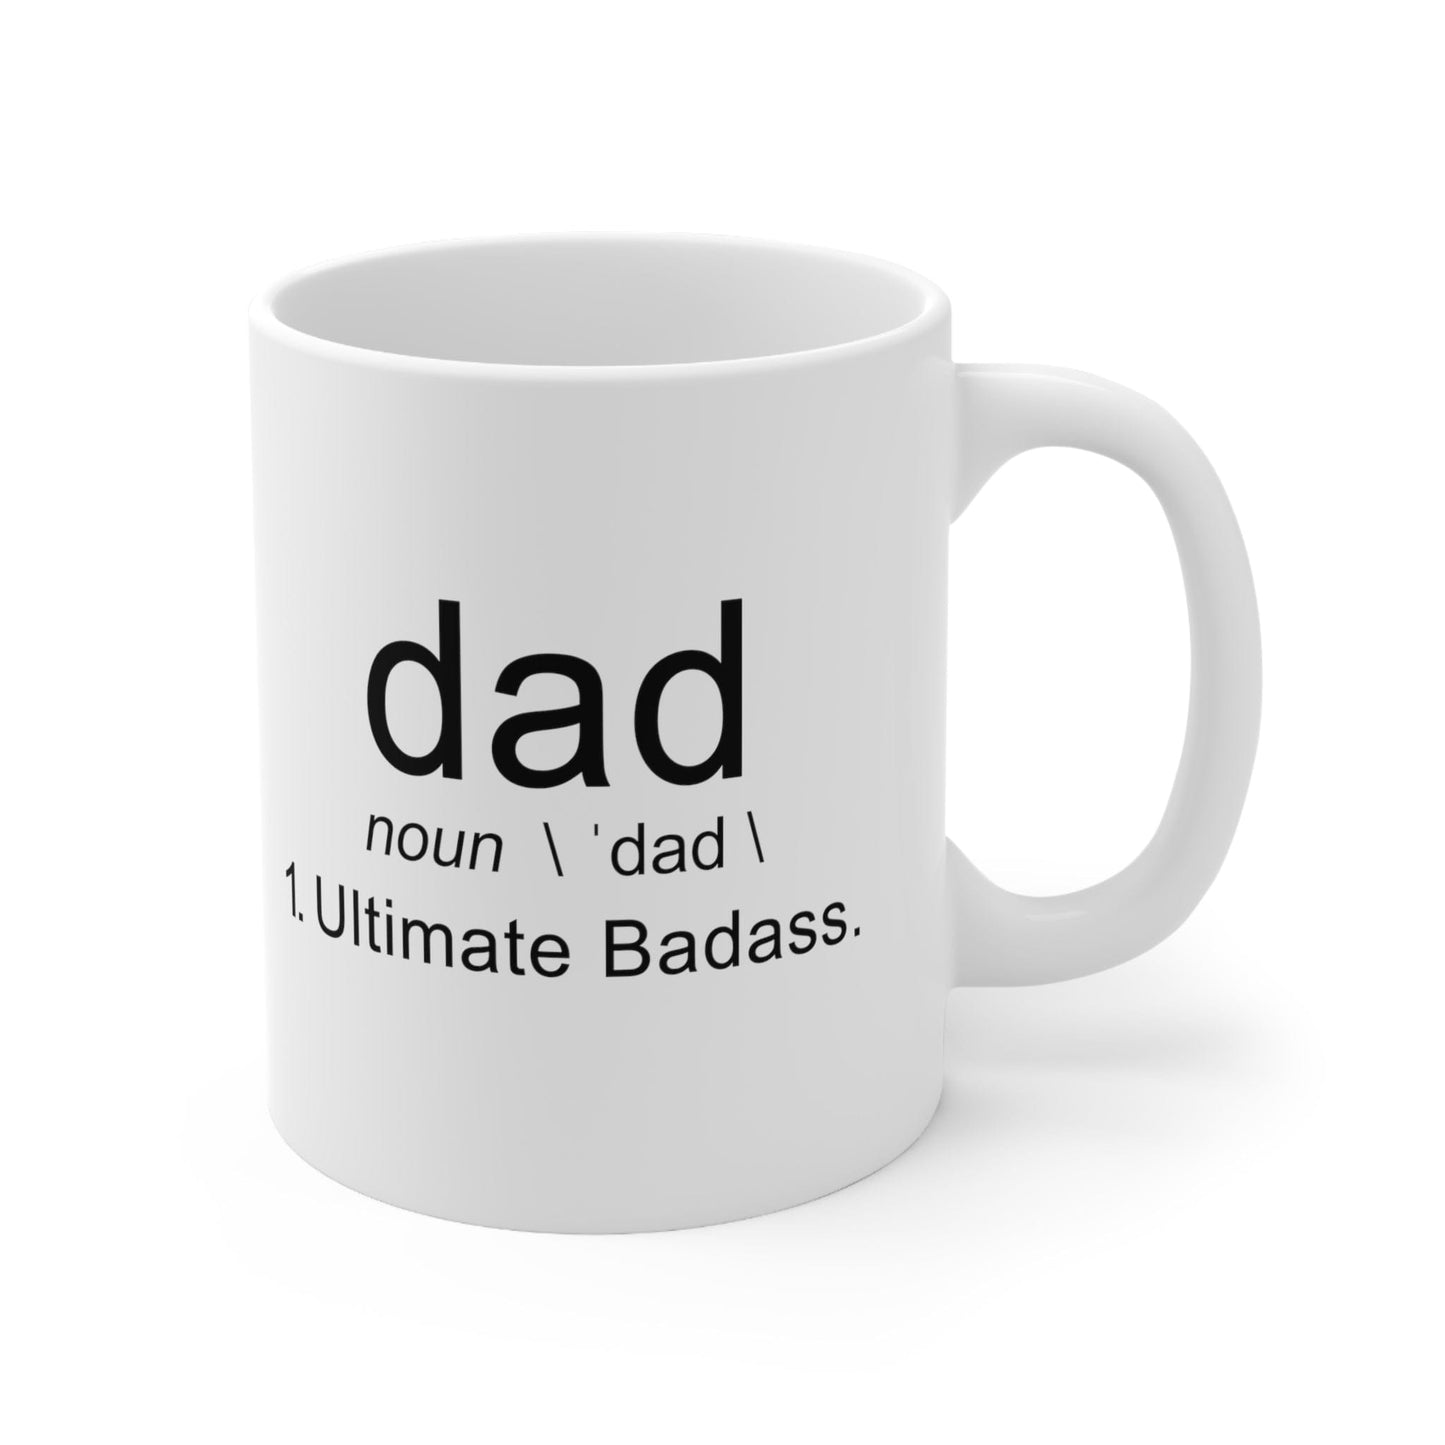 DAD Ultimate Badass Mug 11oz